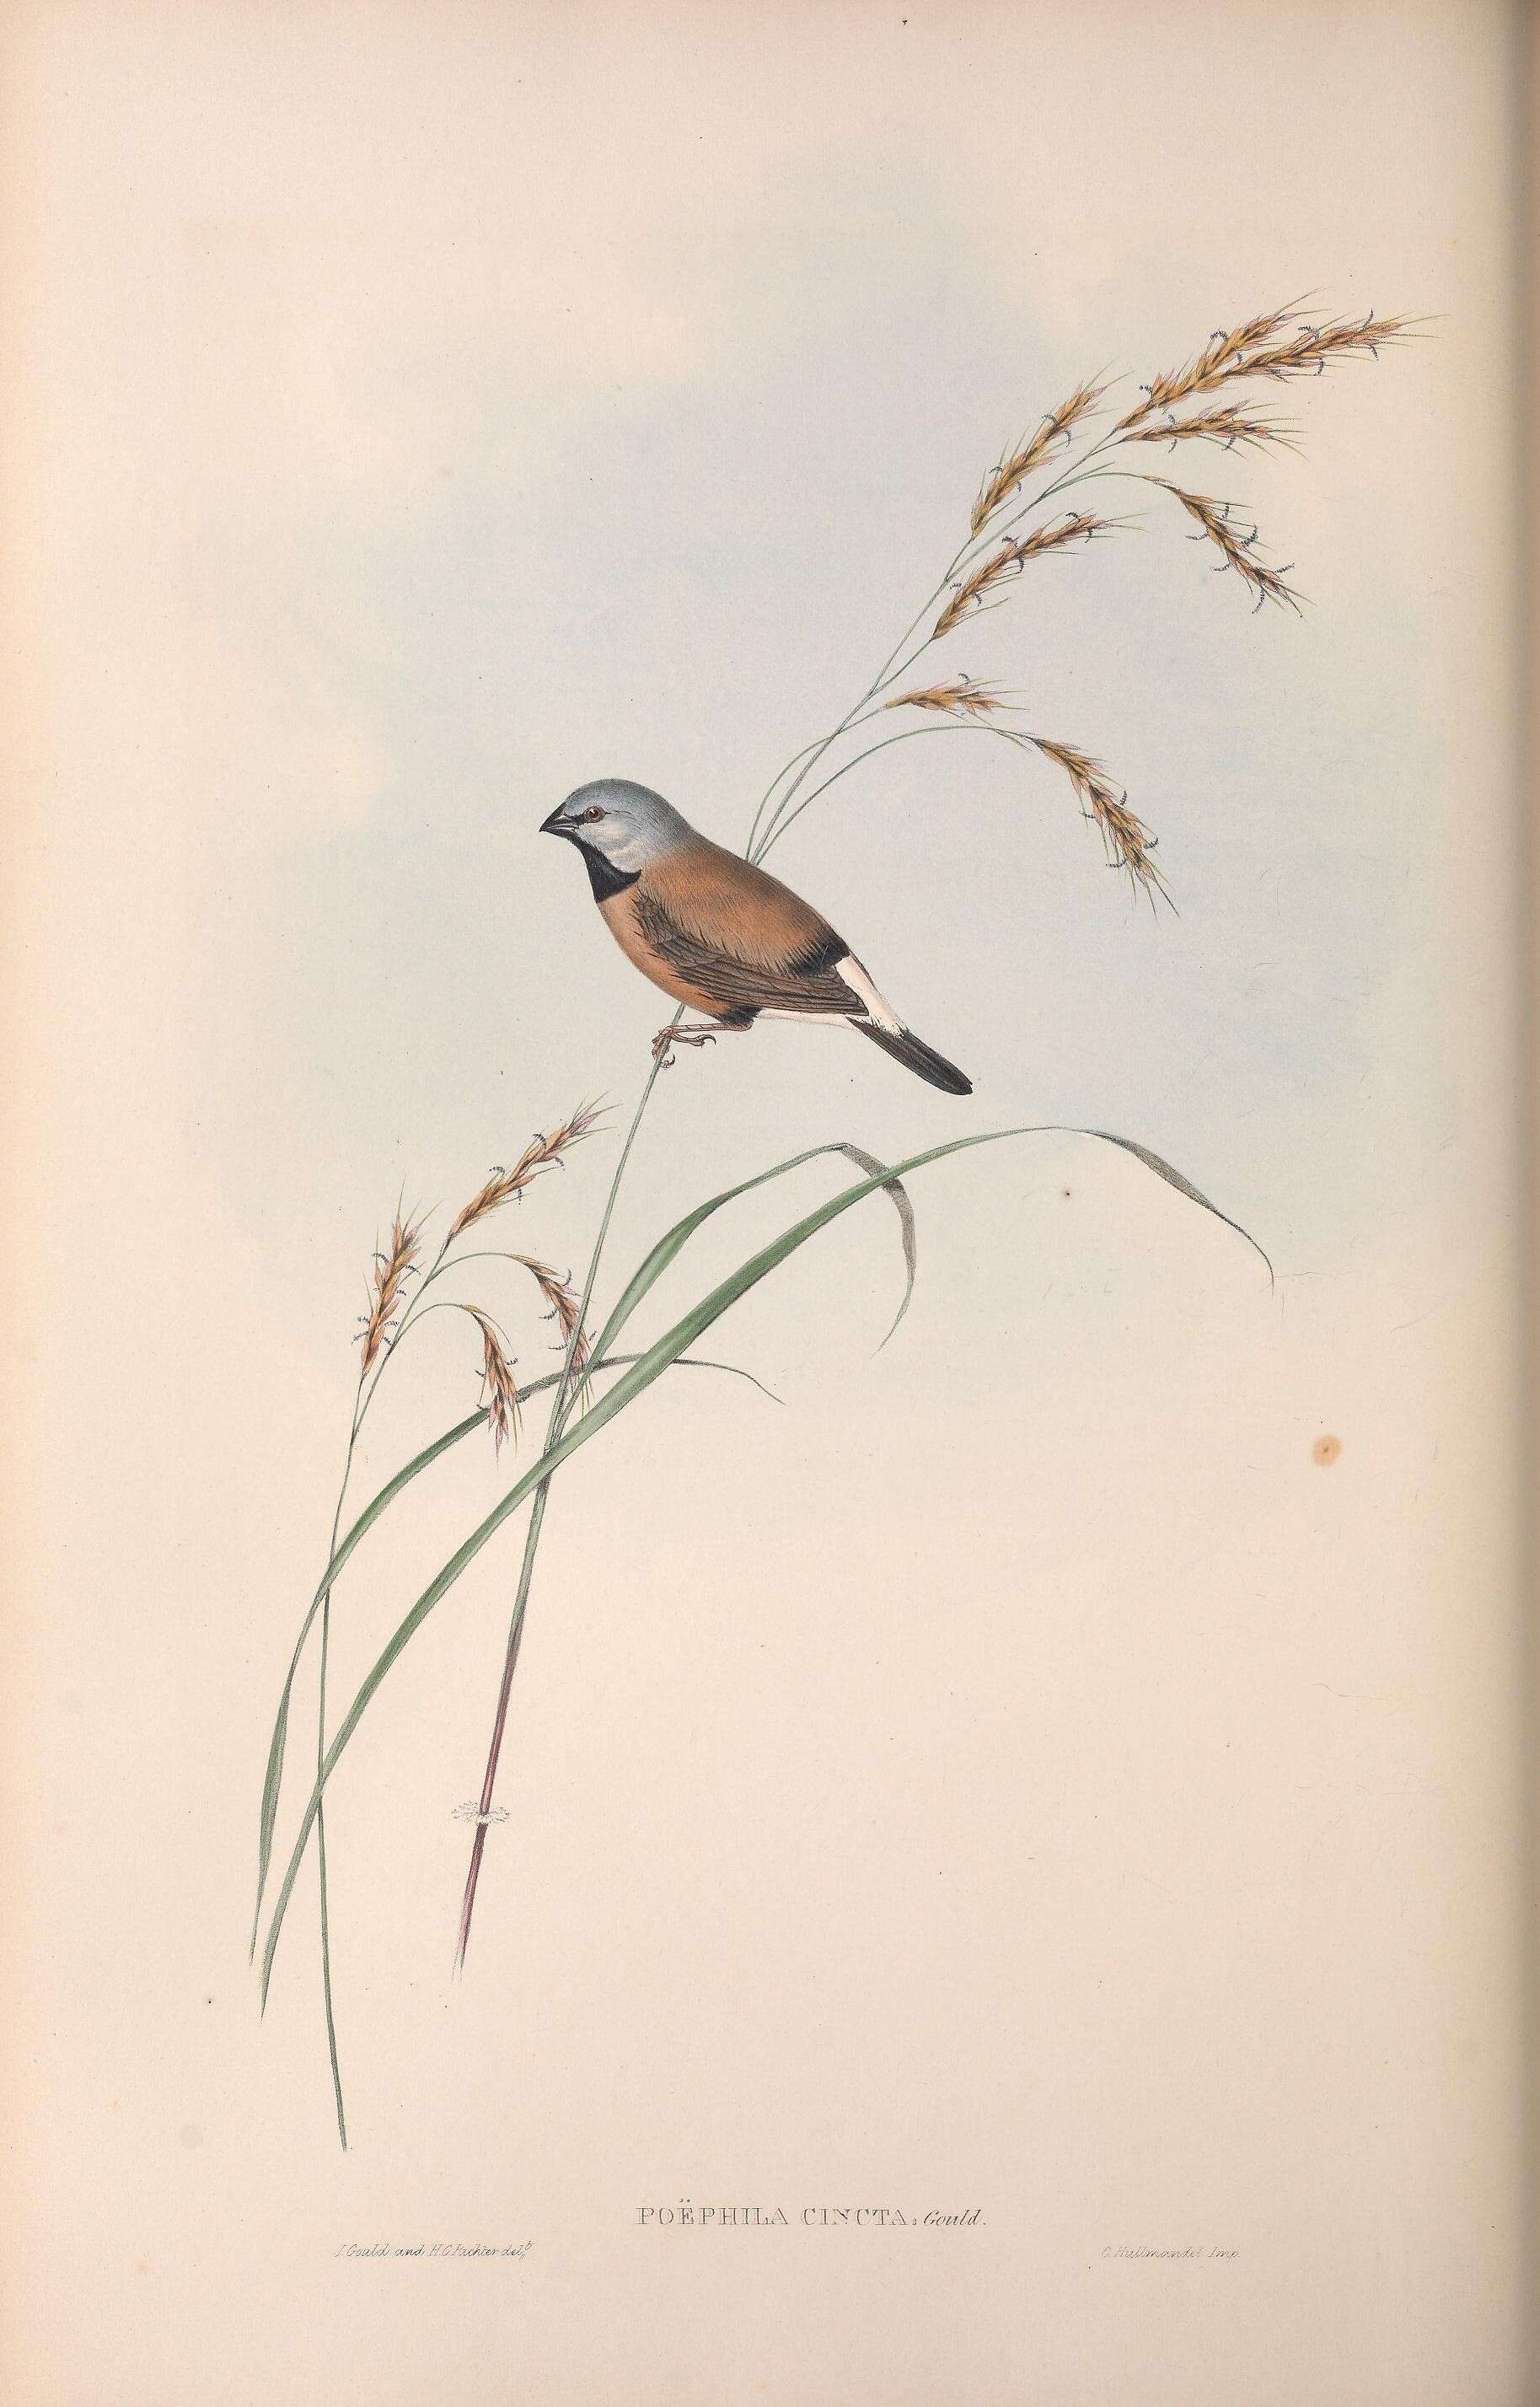 Sivun Poephila cincta cincta (Gould 1837) kuva